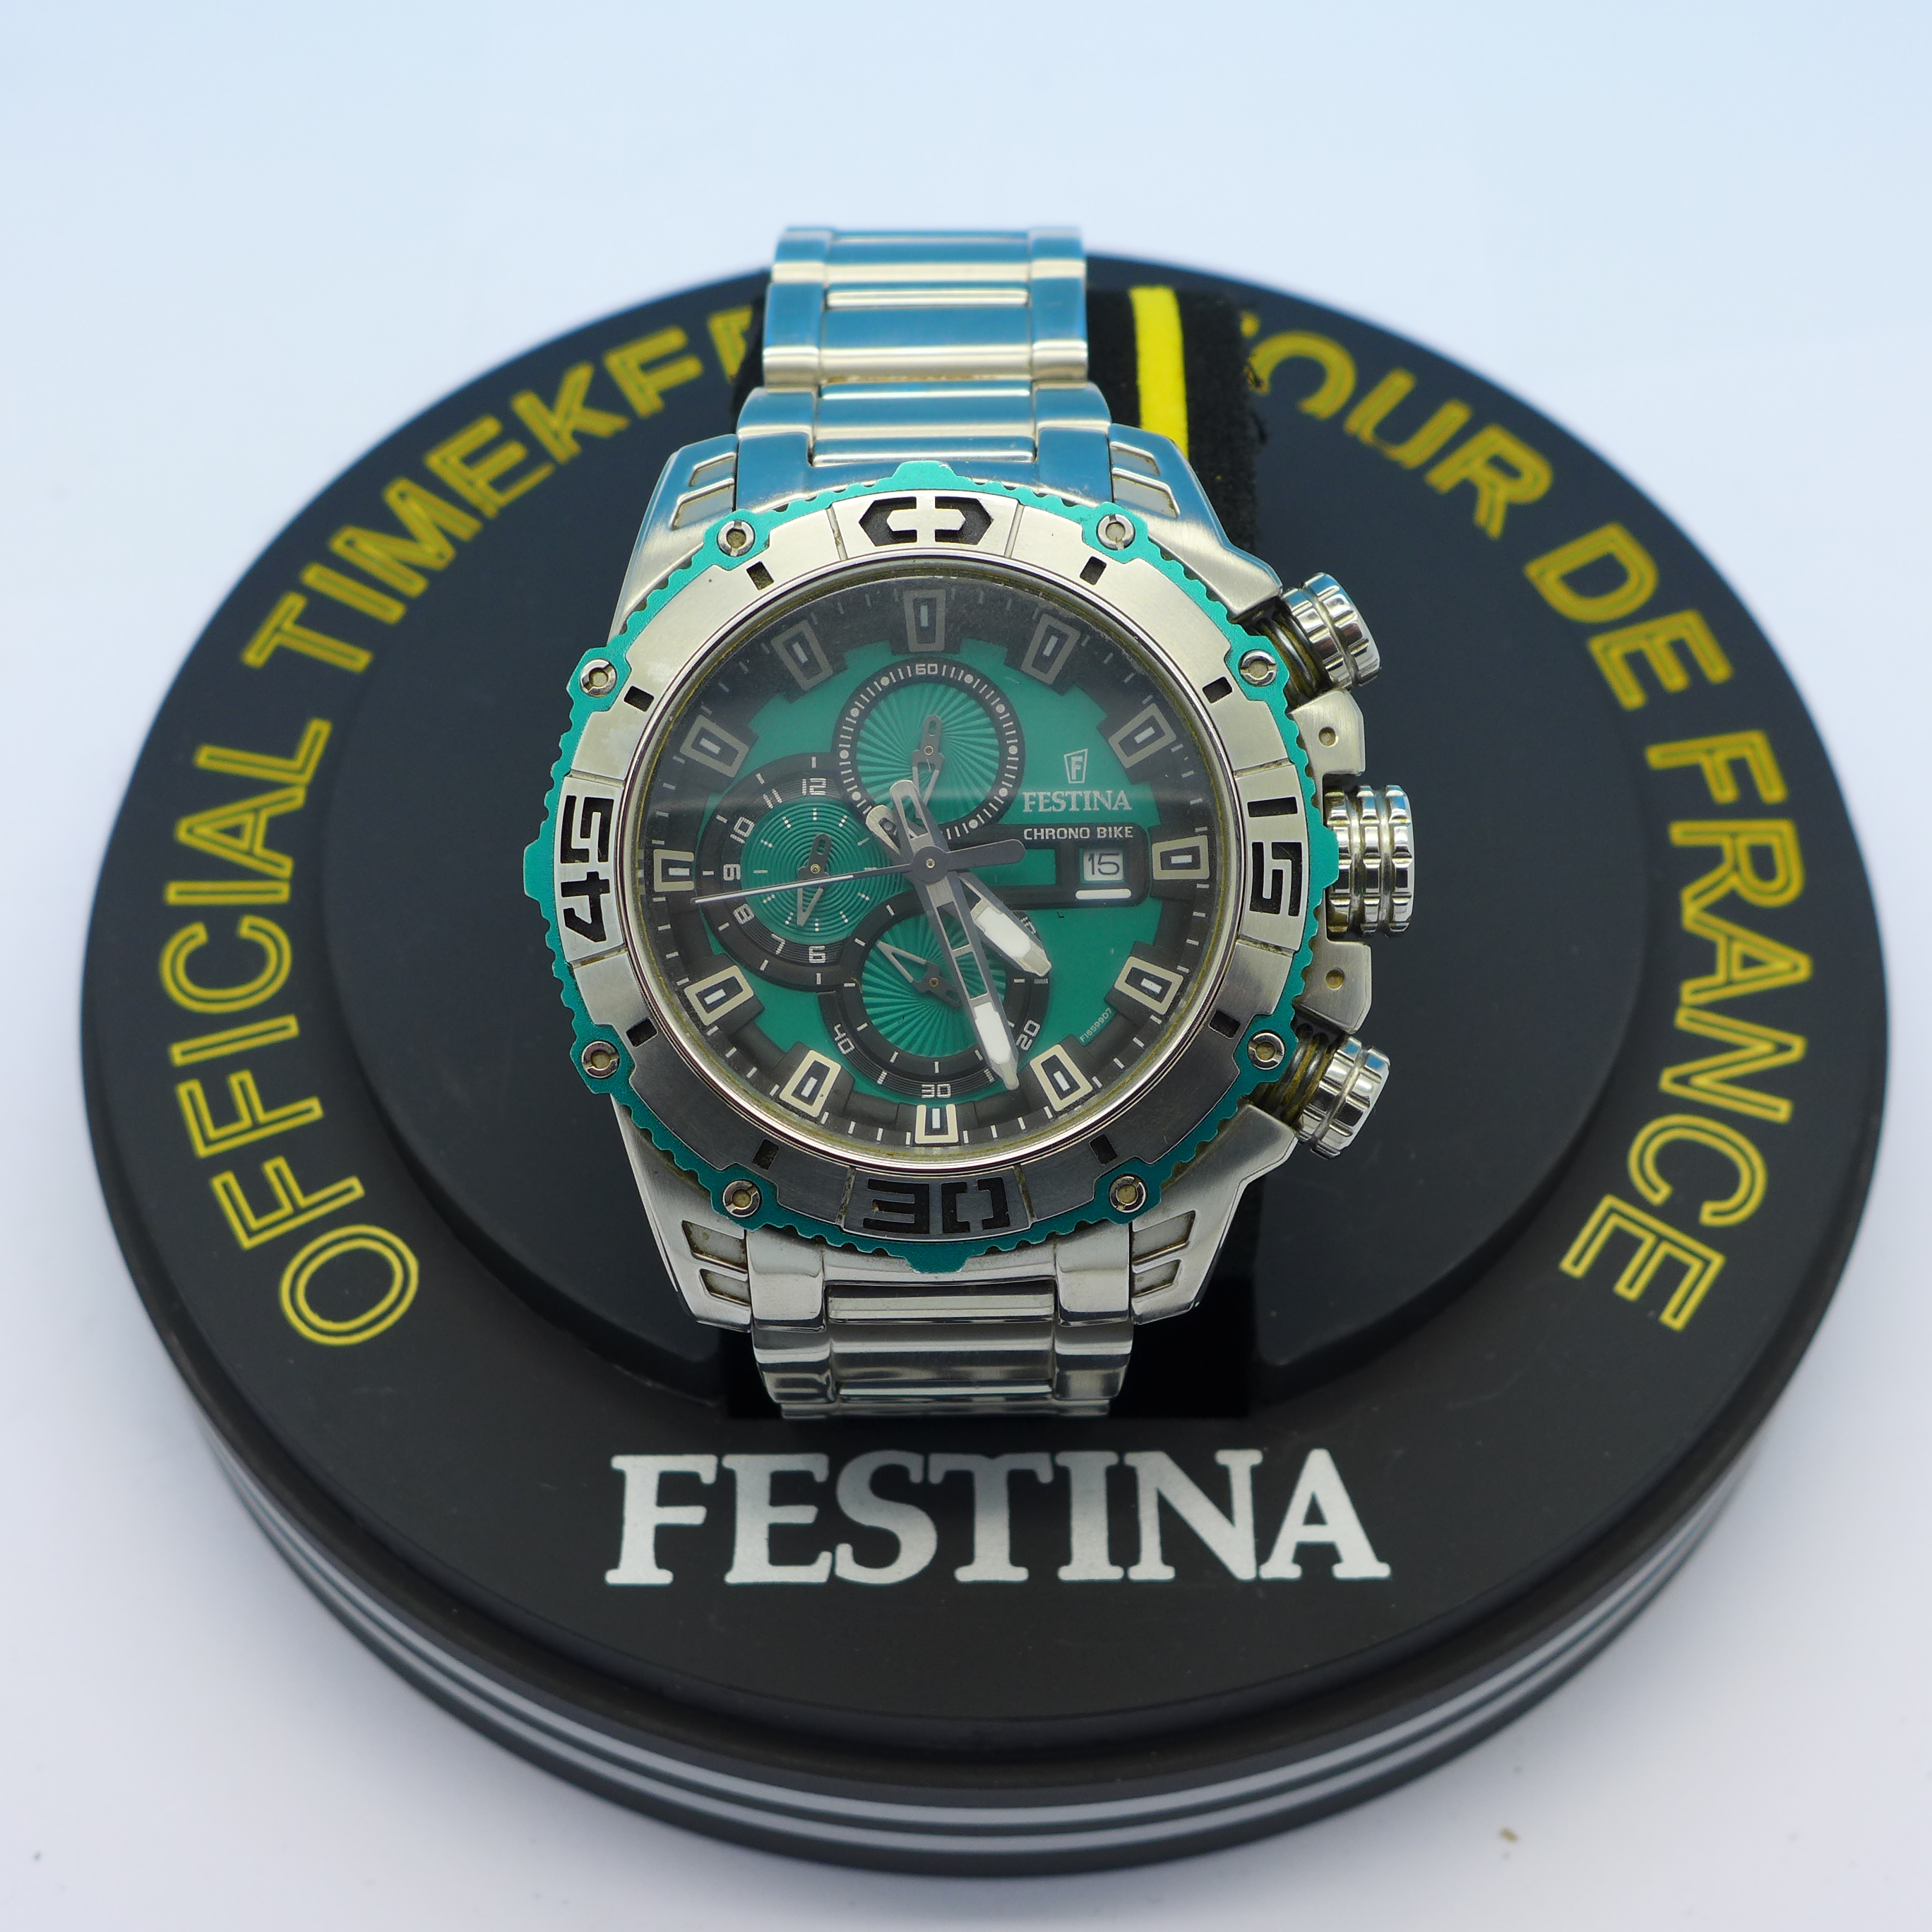 A Festina Tour de France chronograph wristwatch,